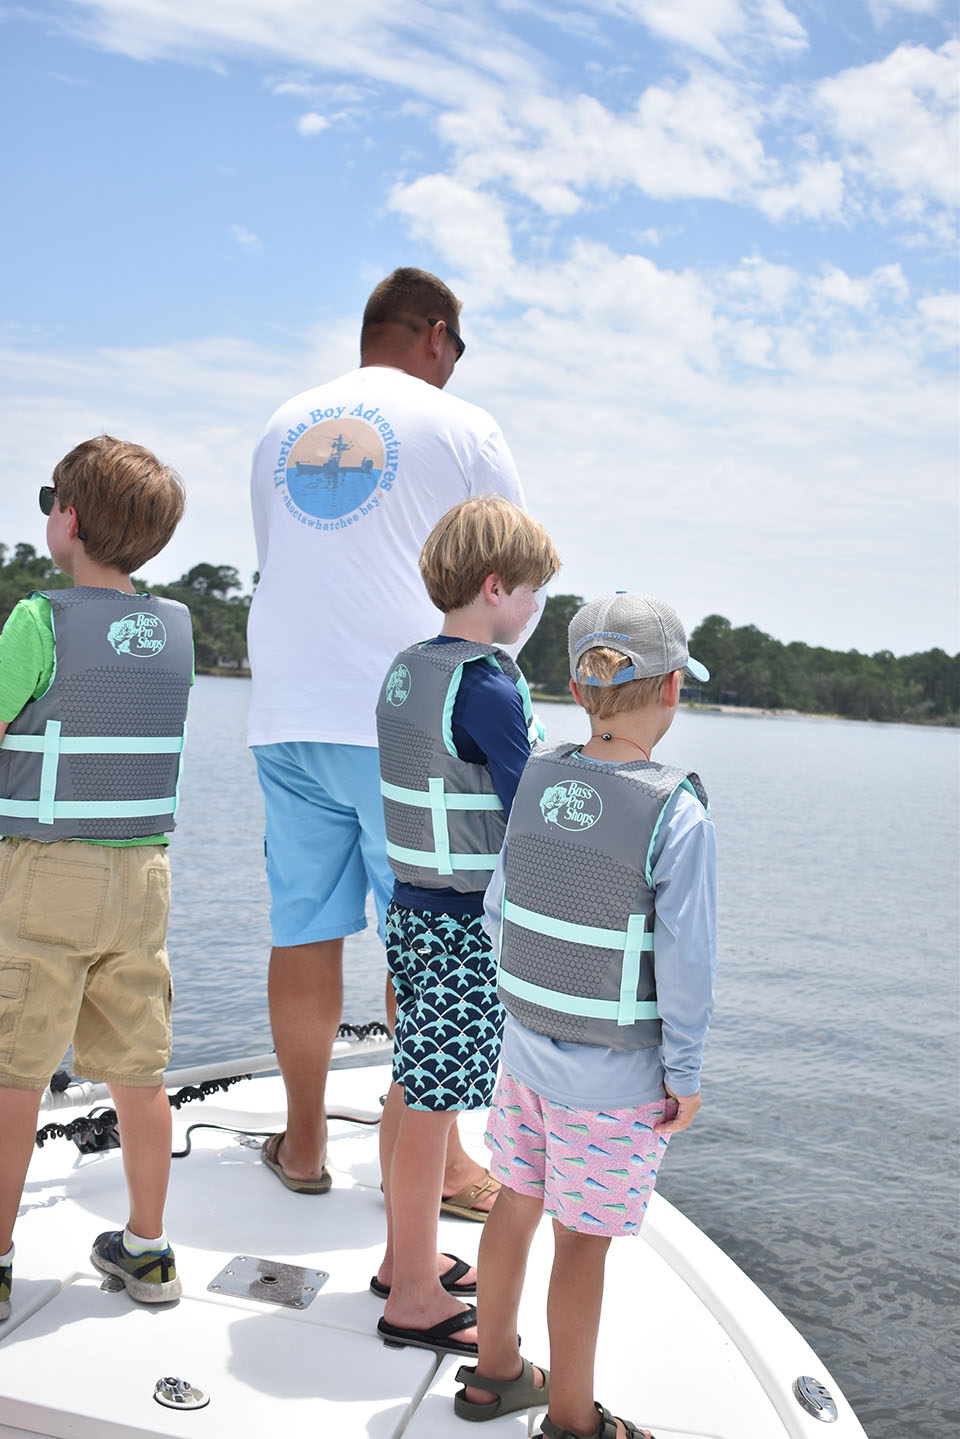 Florida Boy Adventures - Summer Adventure Camp - 30A Kids Inshore Fishing